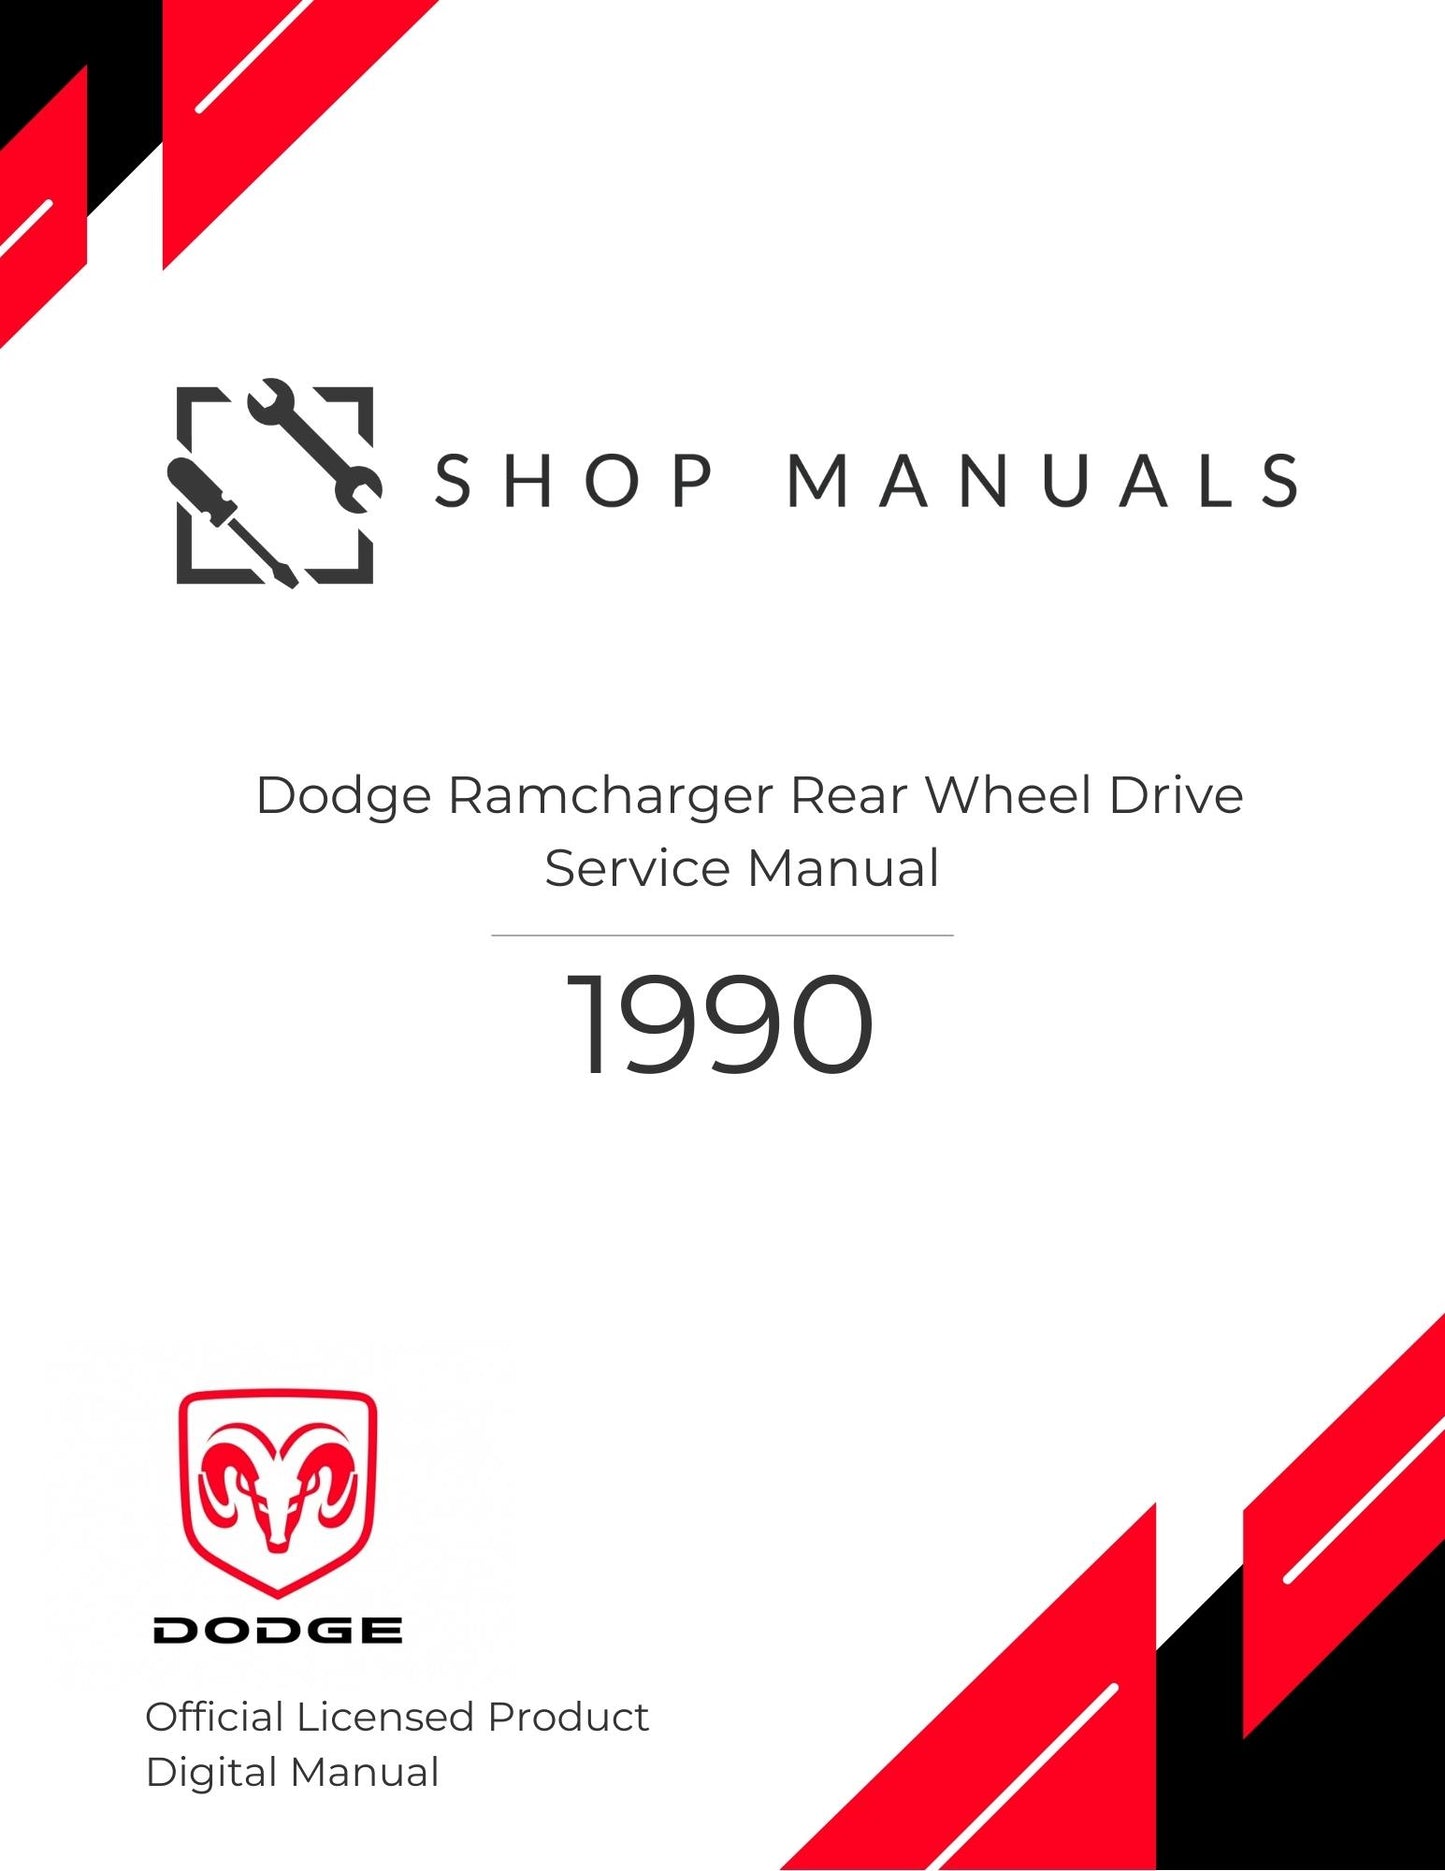 1990 Dodge Ramcharger Rear Wheel Drive Service Manual